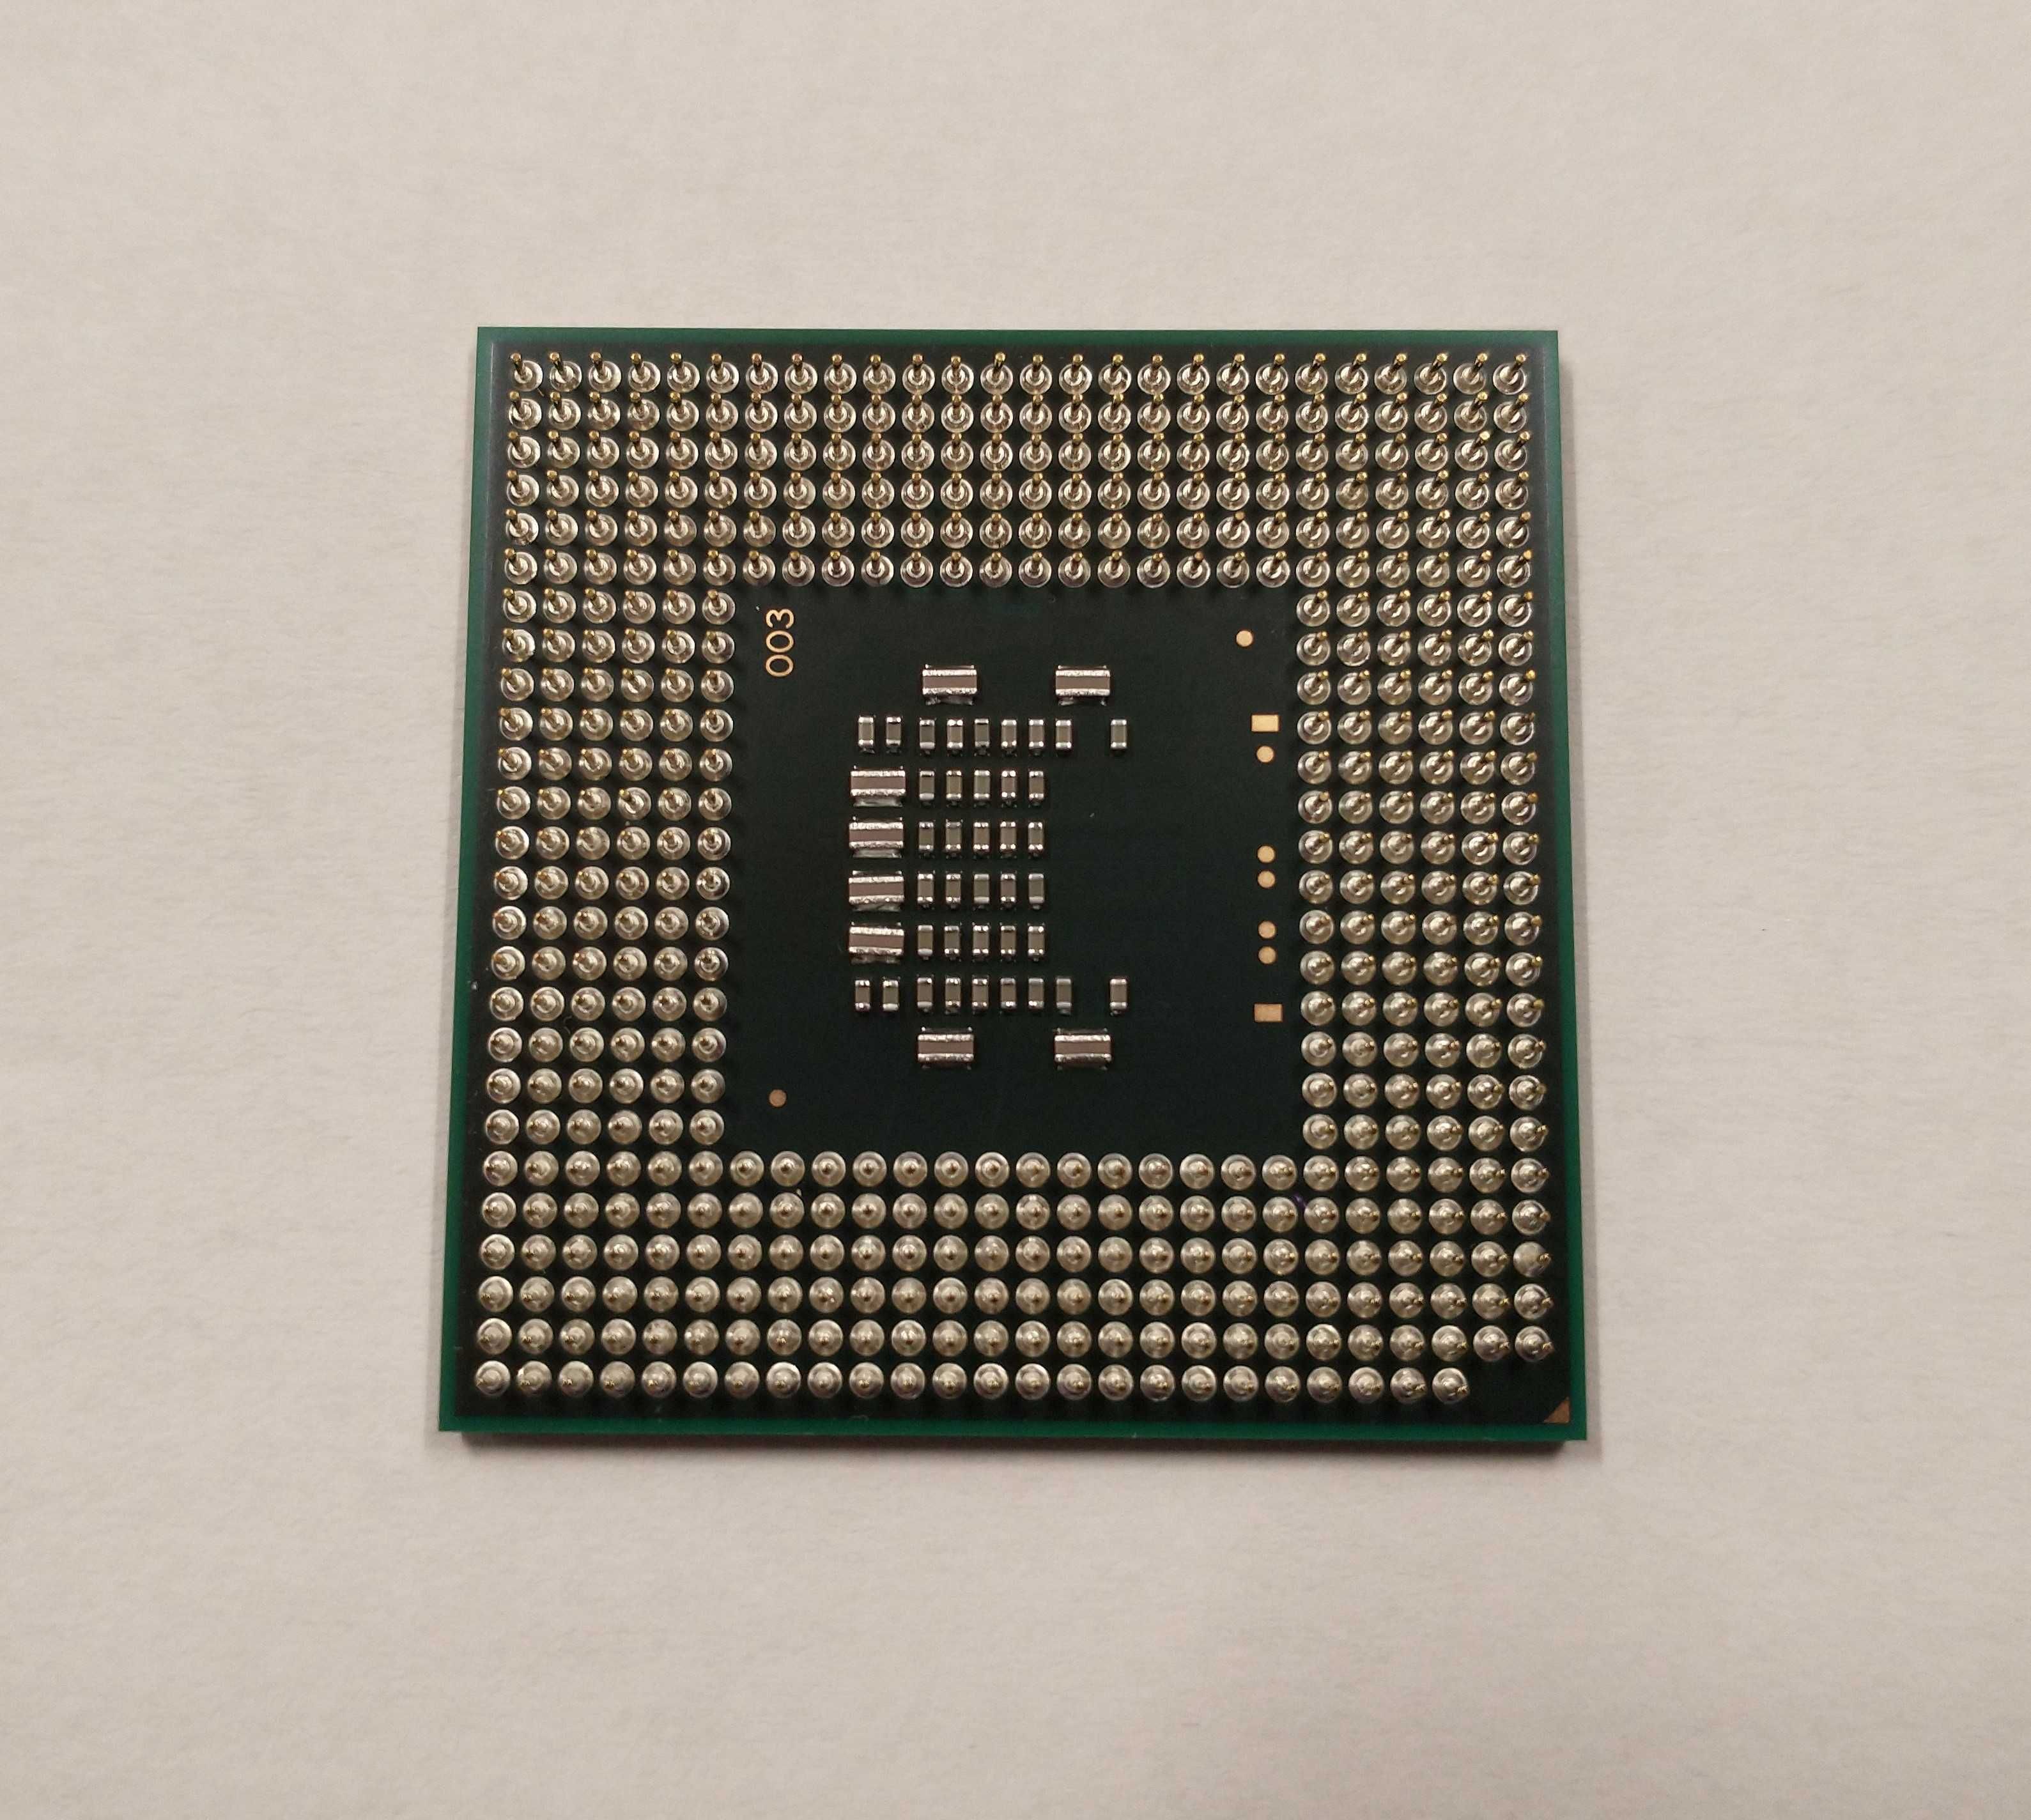 Procesor Intel Core 2 Duo T5670